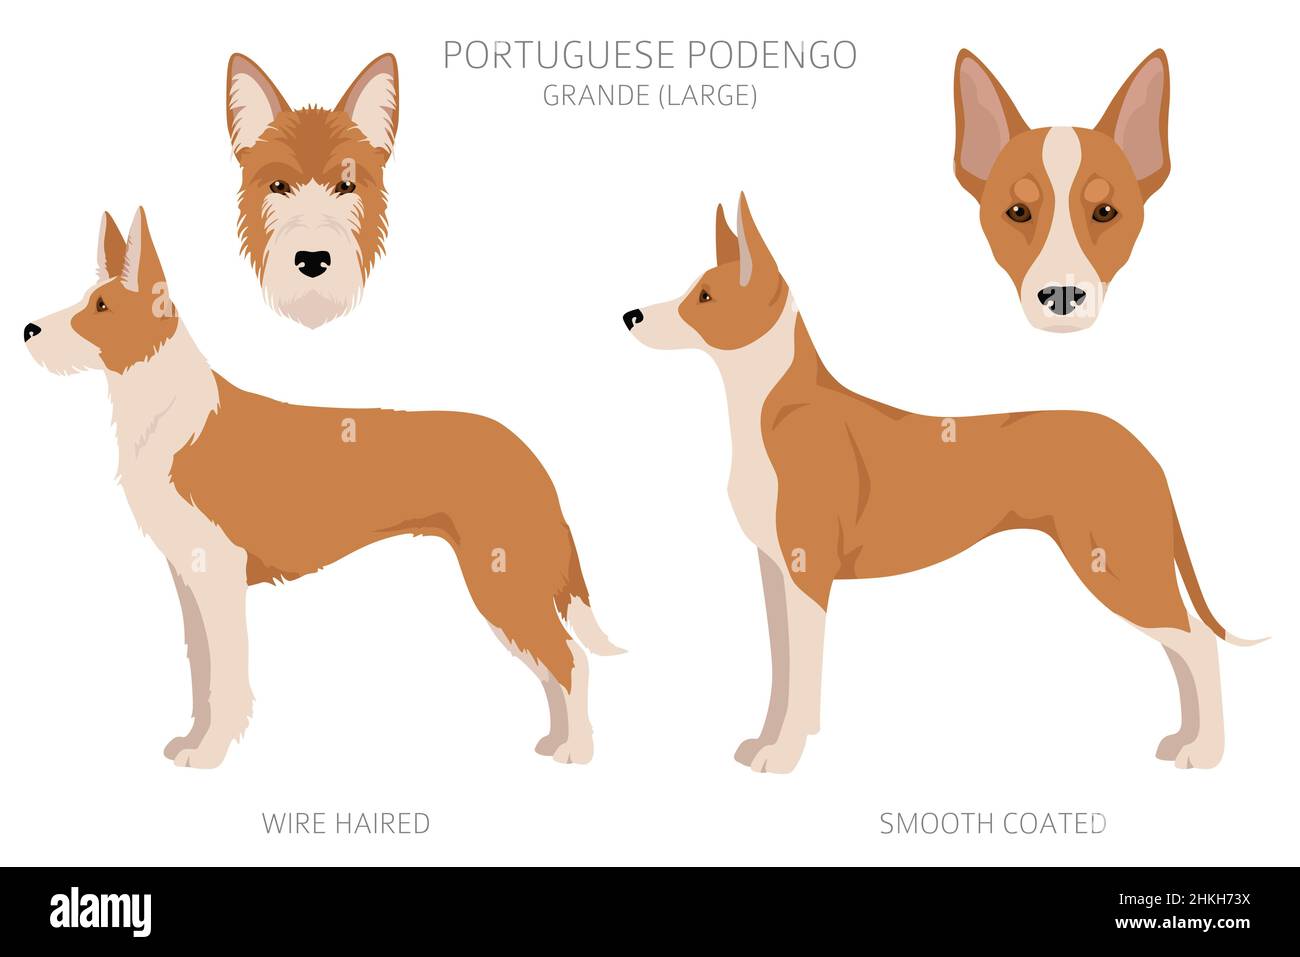 Portuguese Podengo Grande clipart. Different poses, coat colors set.  Vector illustration Stock Vector